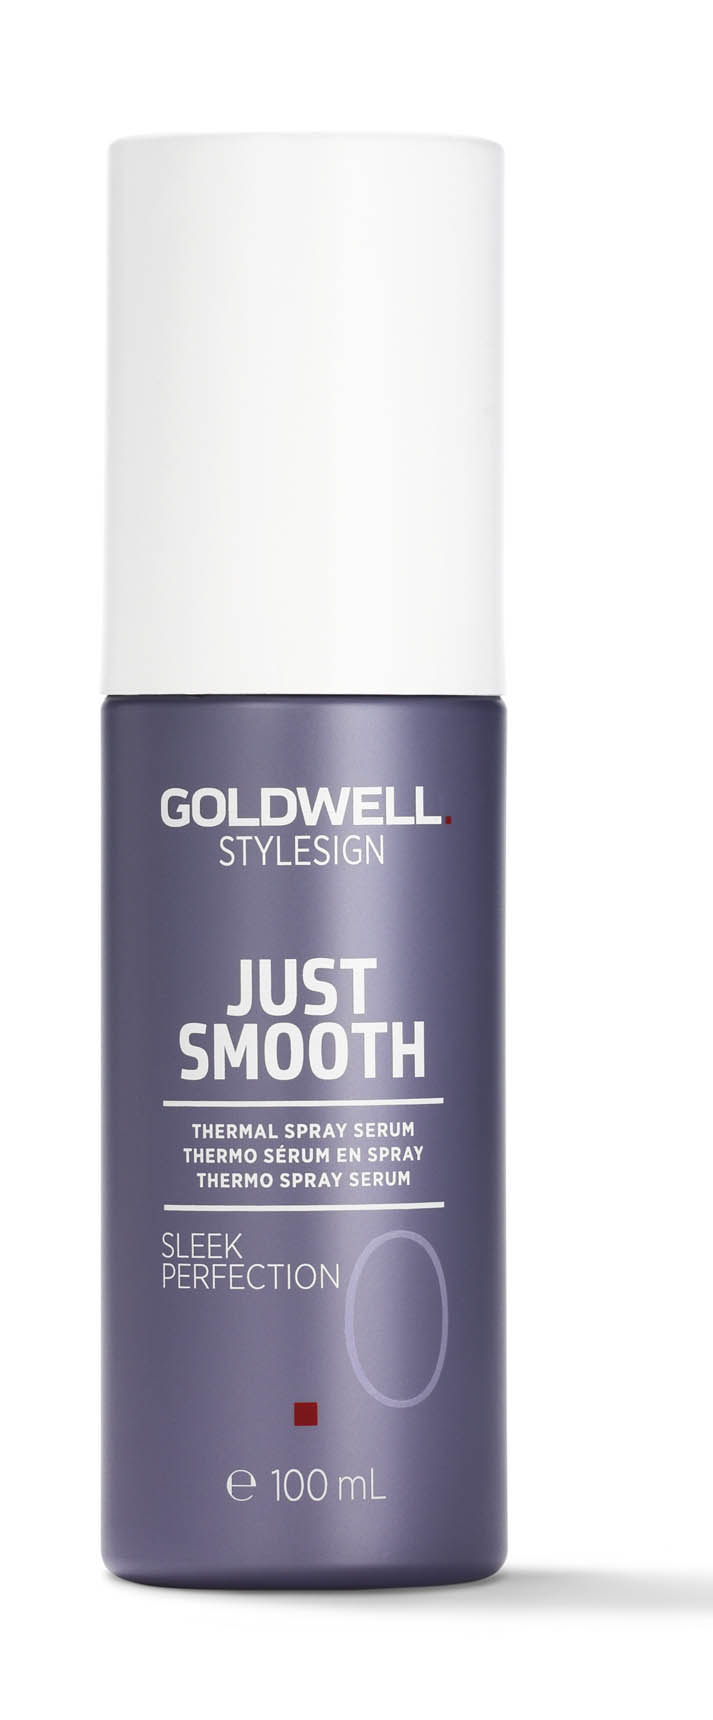 Stylesign SLEEK PERFECTION, Thermo Spray Serum, 100 ml